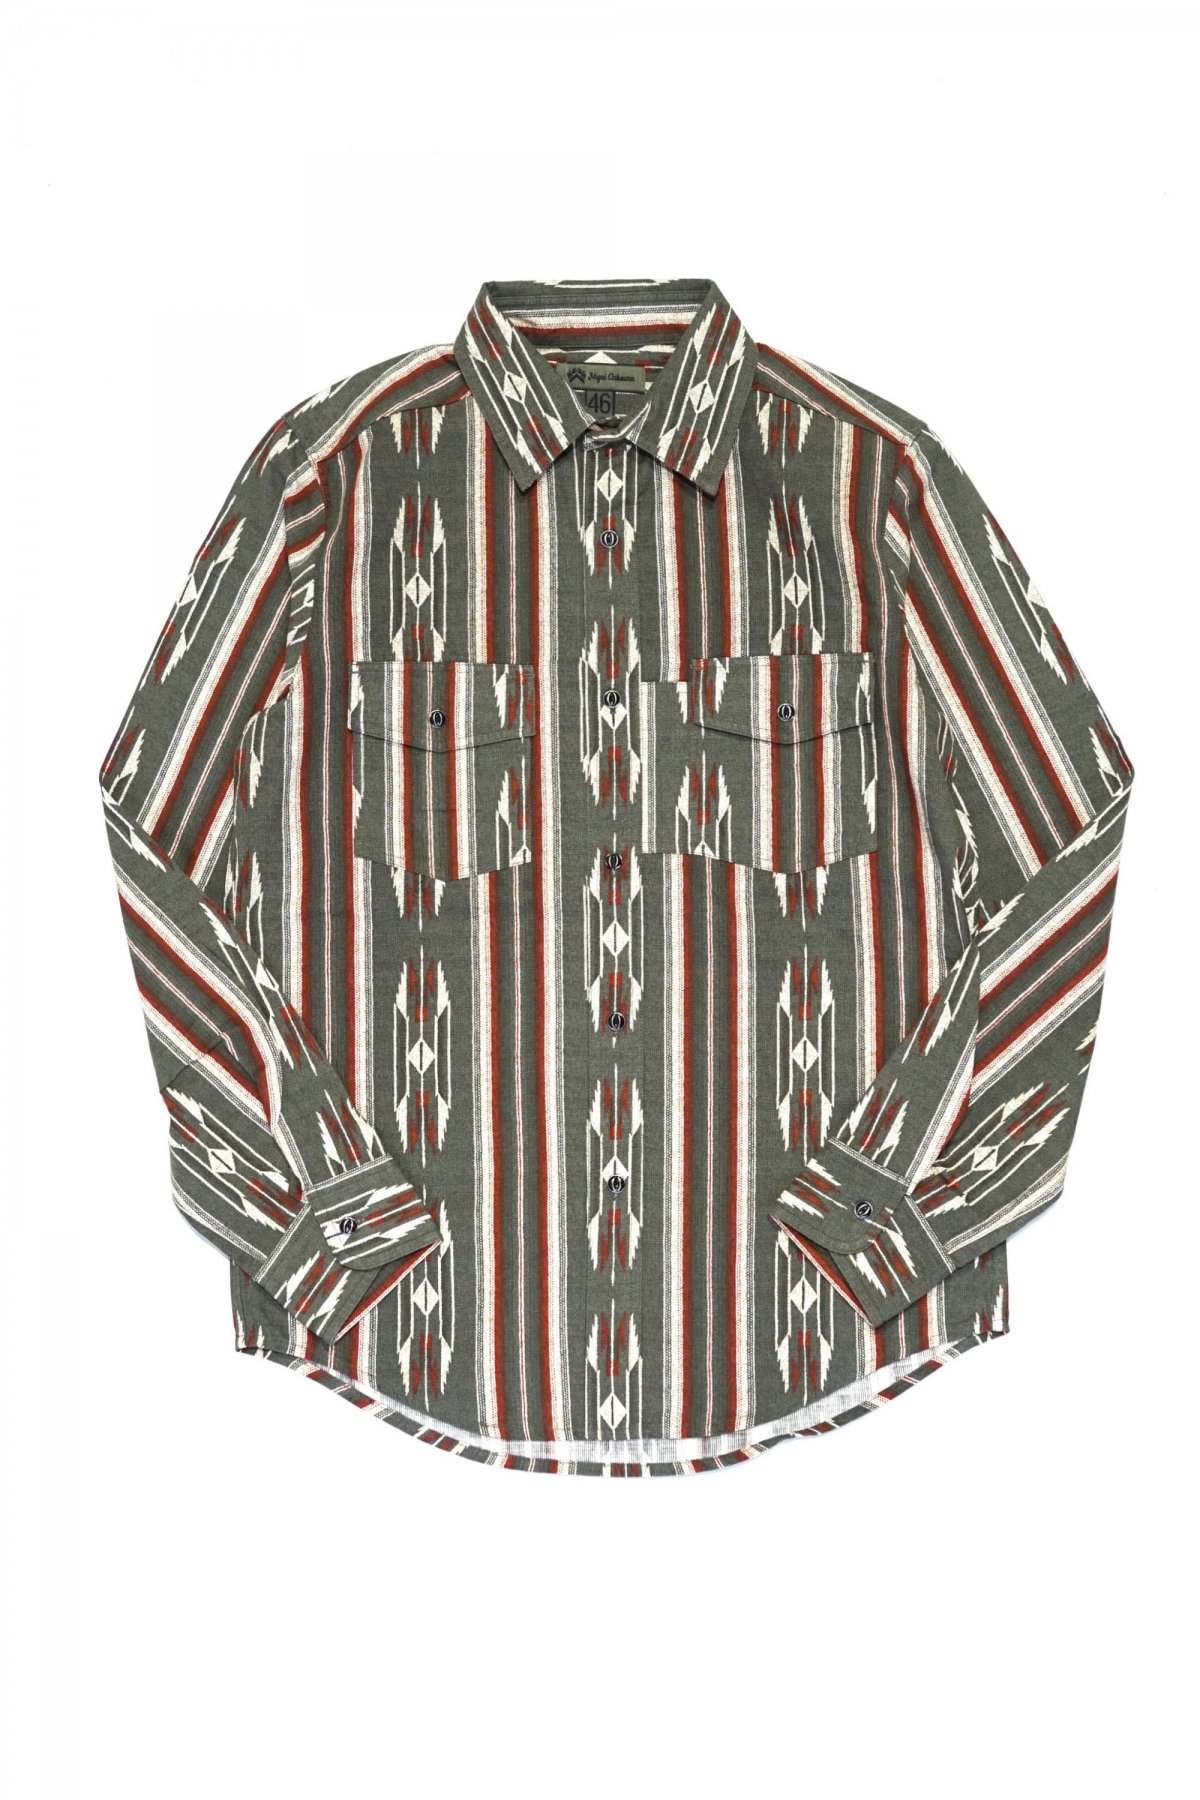 90’s美品4万円 旧ナイジェルケーボン イタリア製生地シャツジャケット